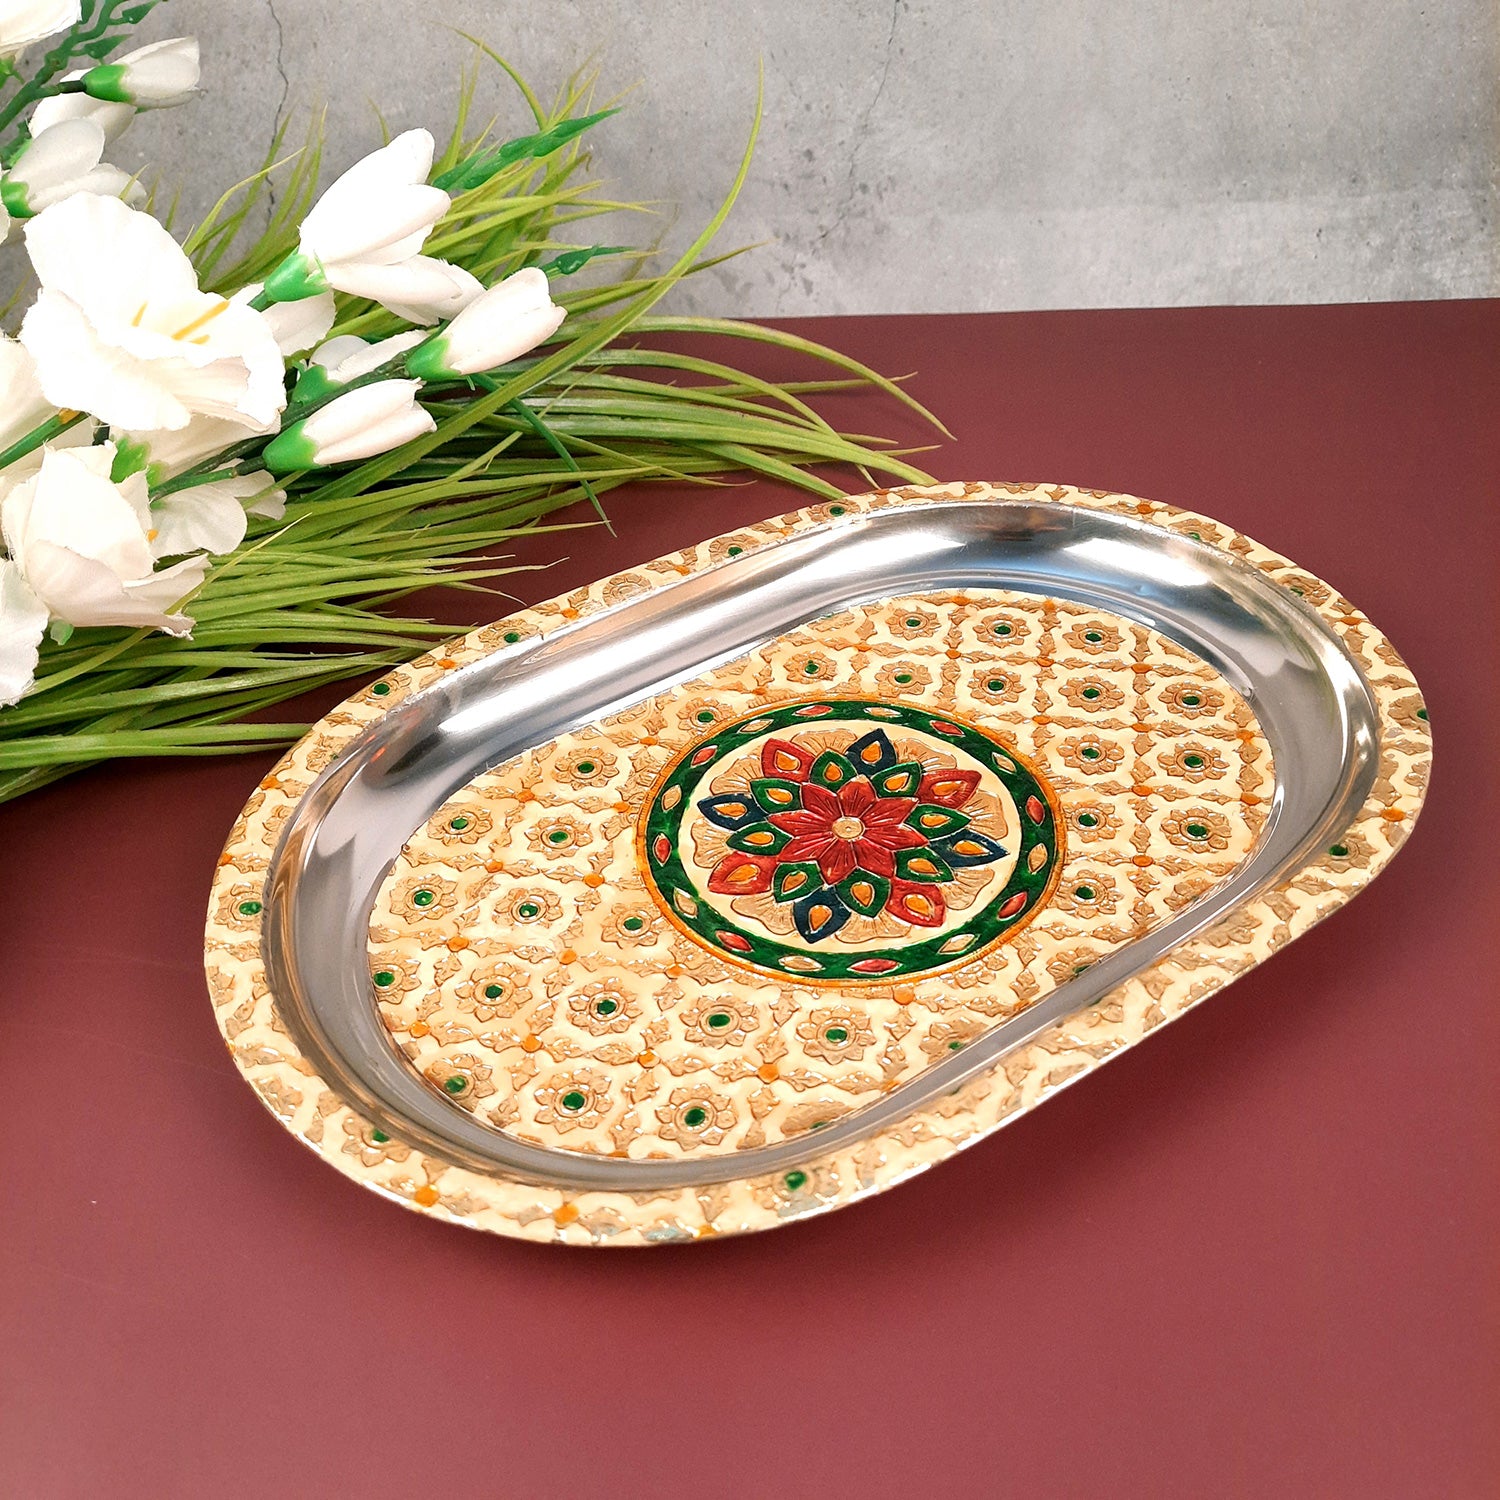 Serving Tray Steel | Tea & Snacks Serving Platter - for Home, Dining Table, Kitchen Decor | Wedding & Housewarming Gift - 12 Inch - Apkamart